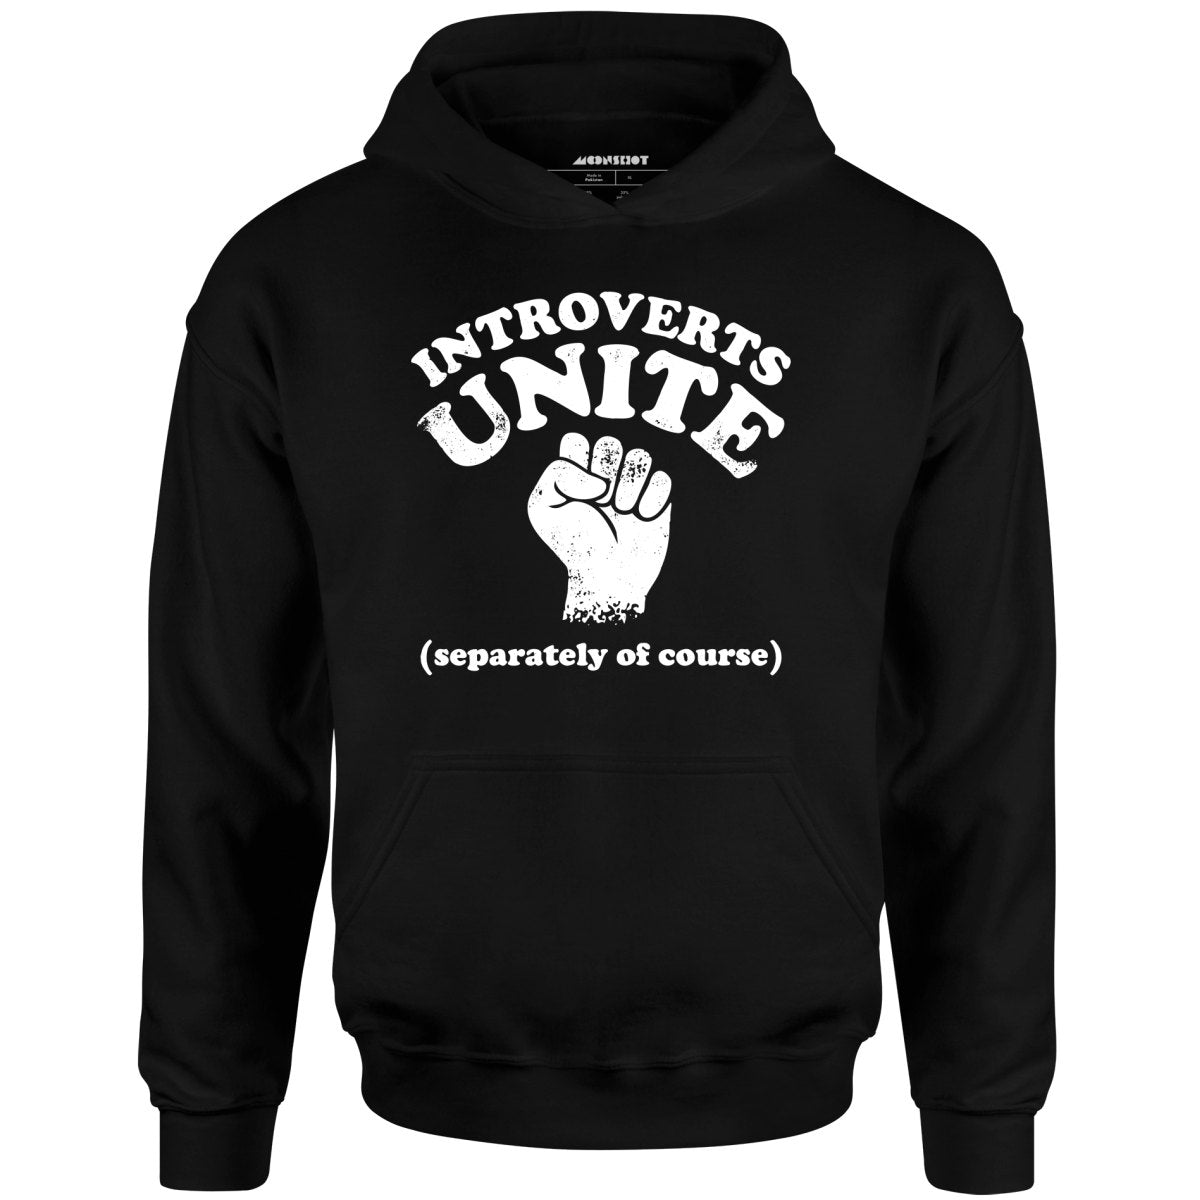 Introverts Unite - Unisex Hoodie